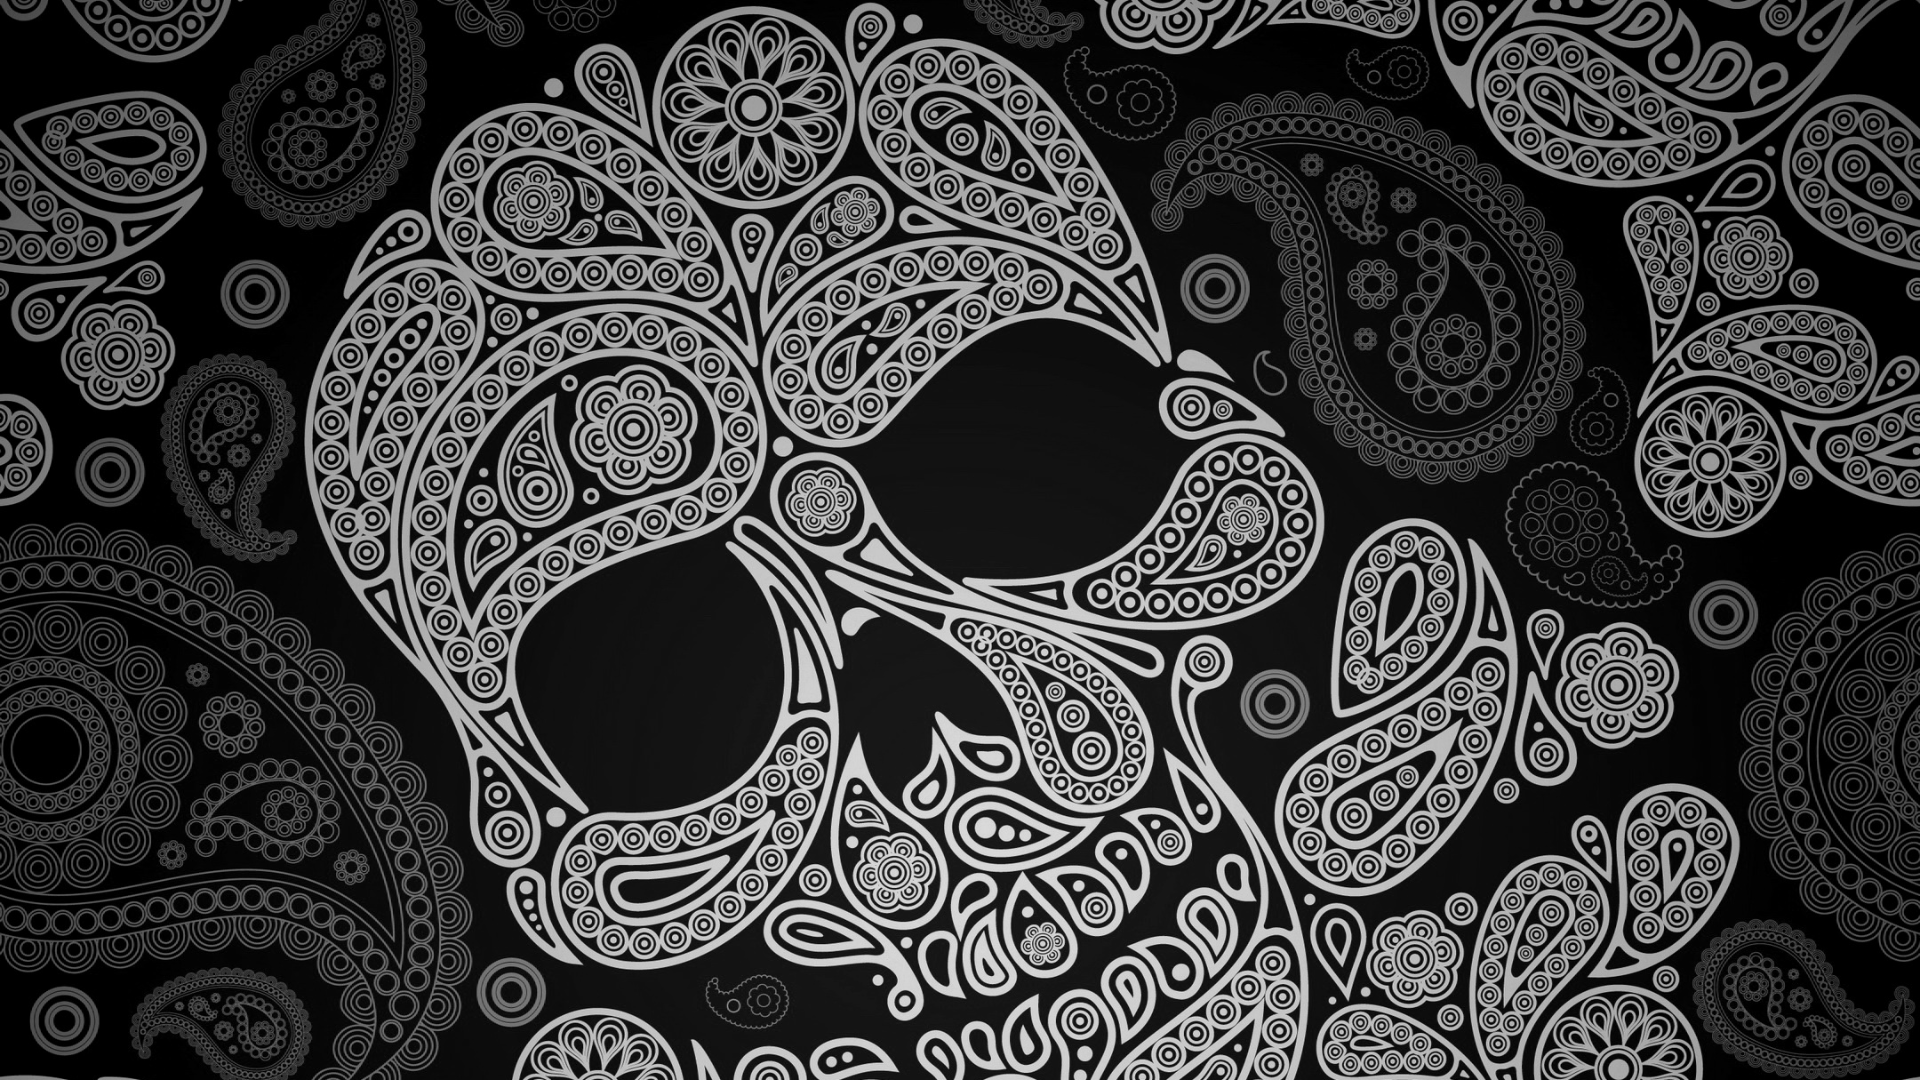 Paisley Skull Nexus 5 Wallpaper (1920x1080)